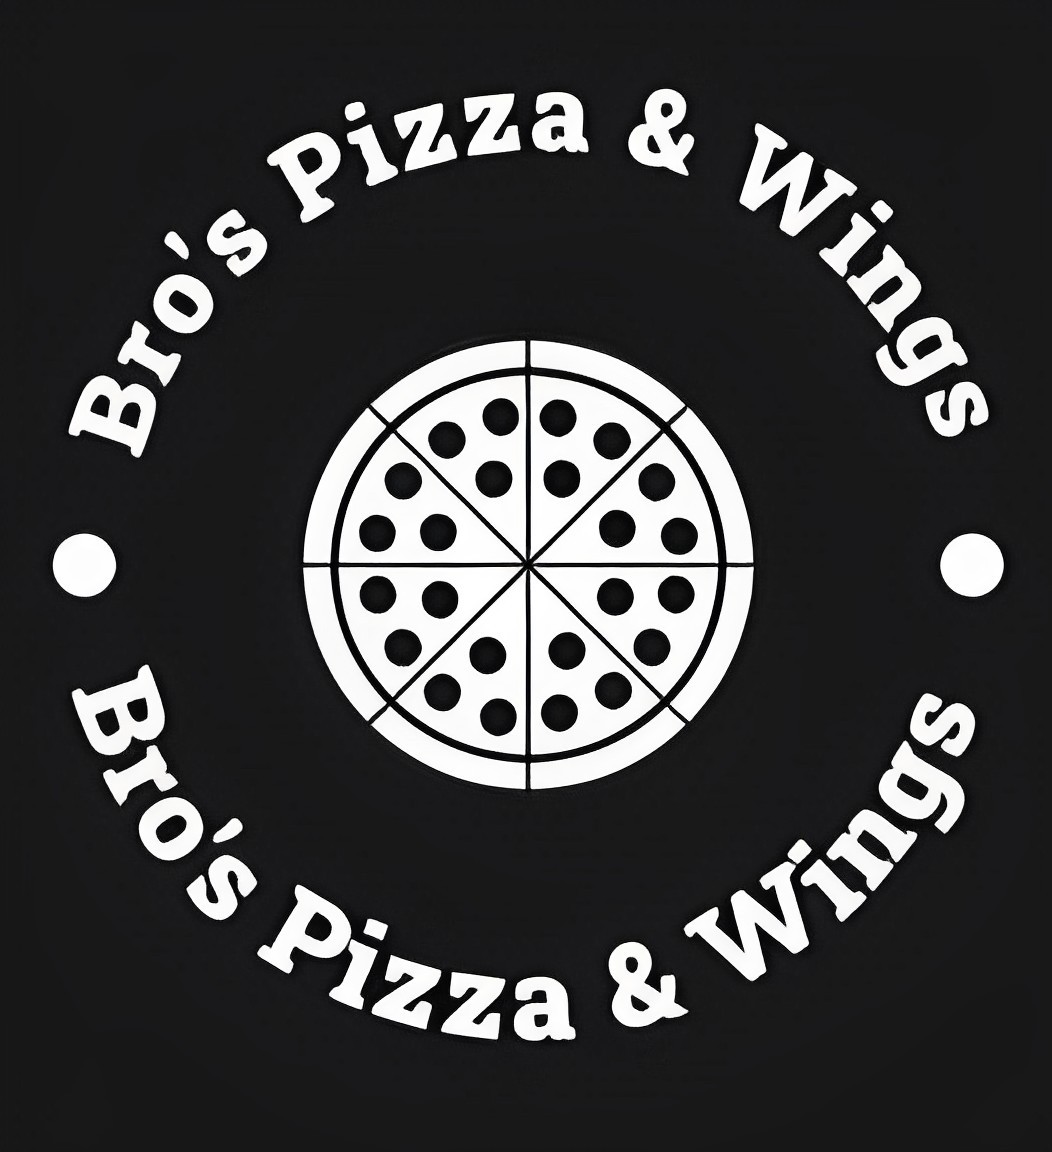 Bro's Pizza & Wings Logo